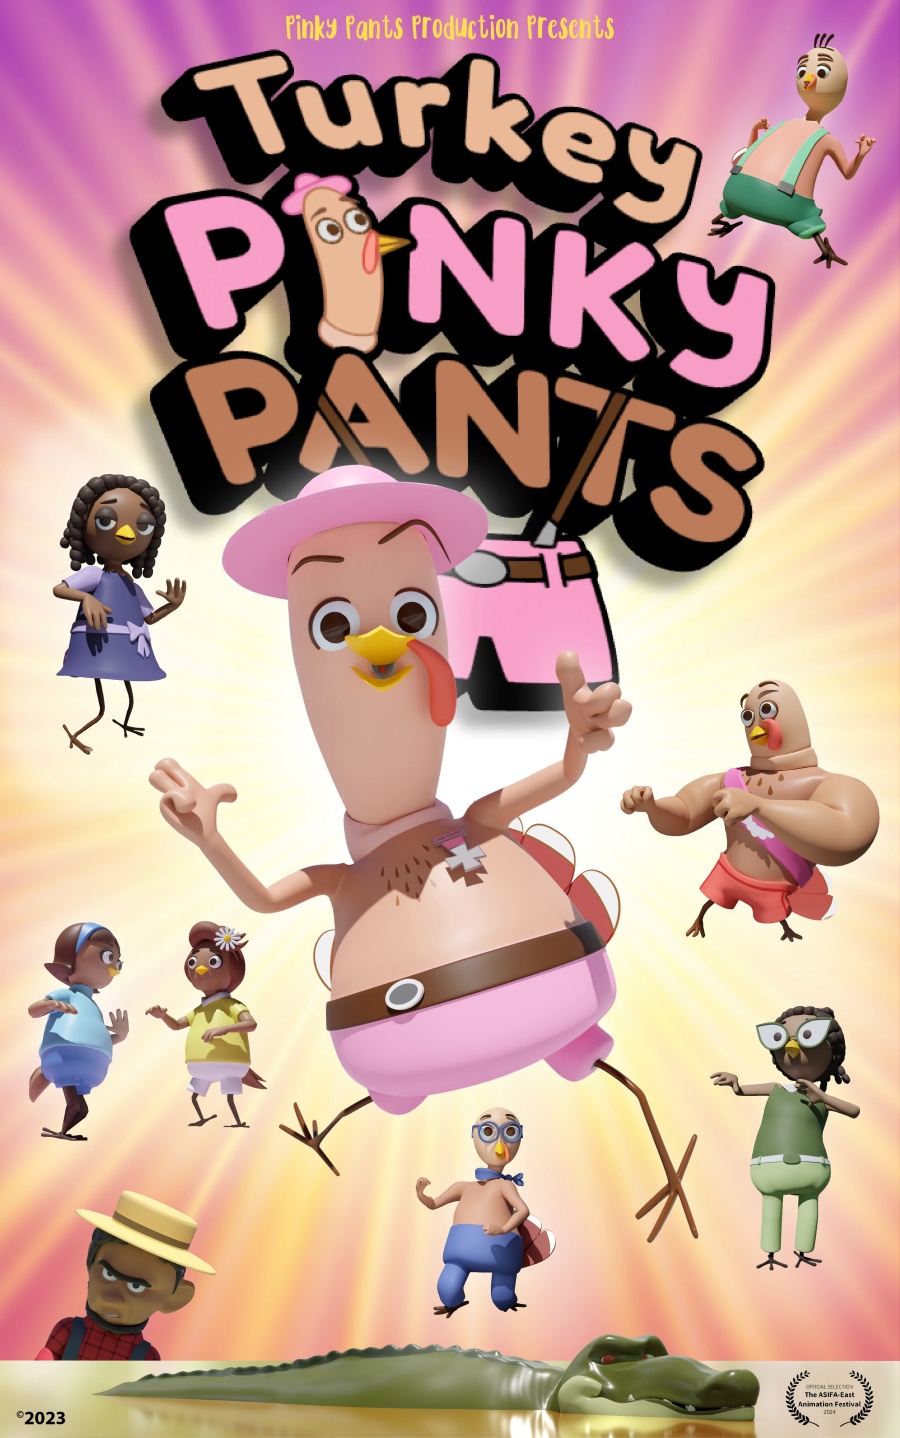 'Turkey Pinky Pants